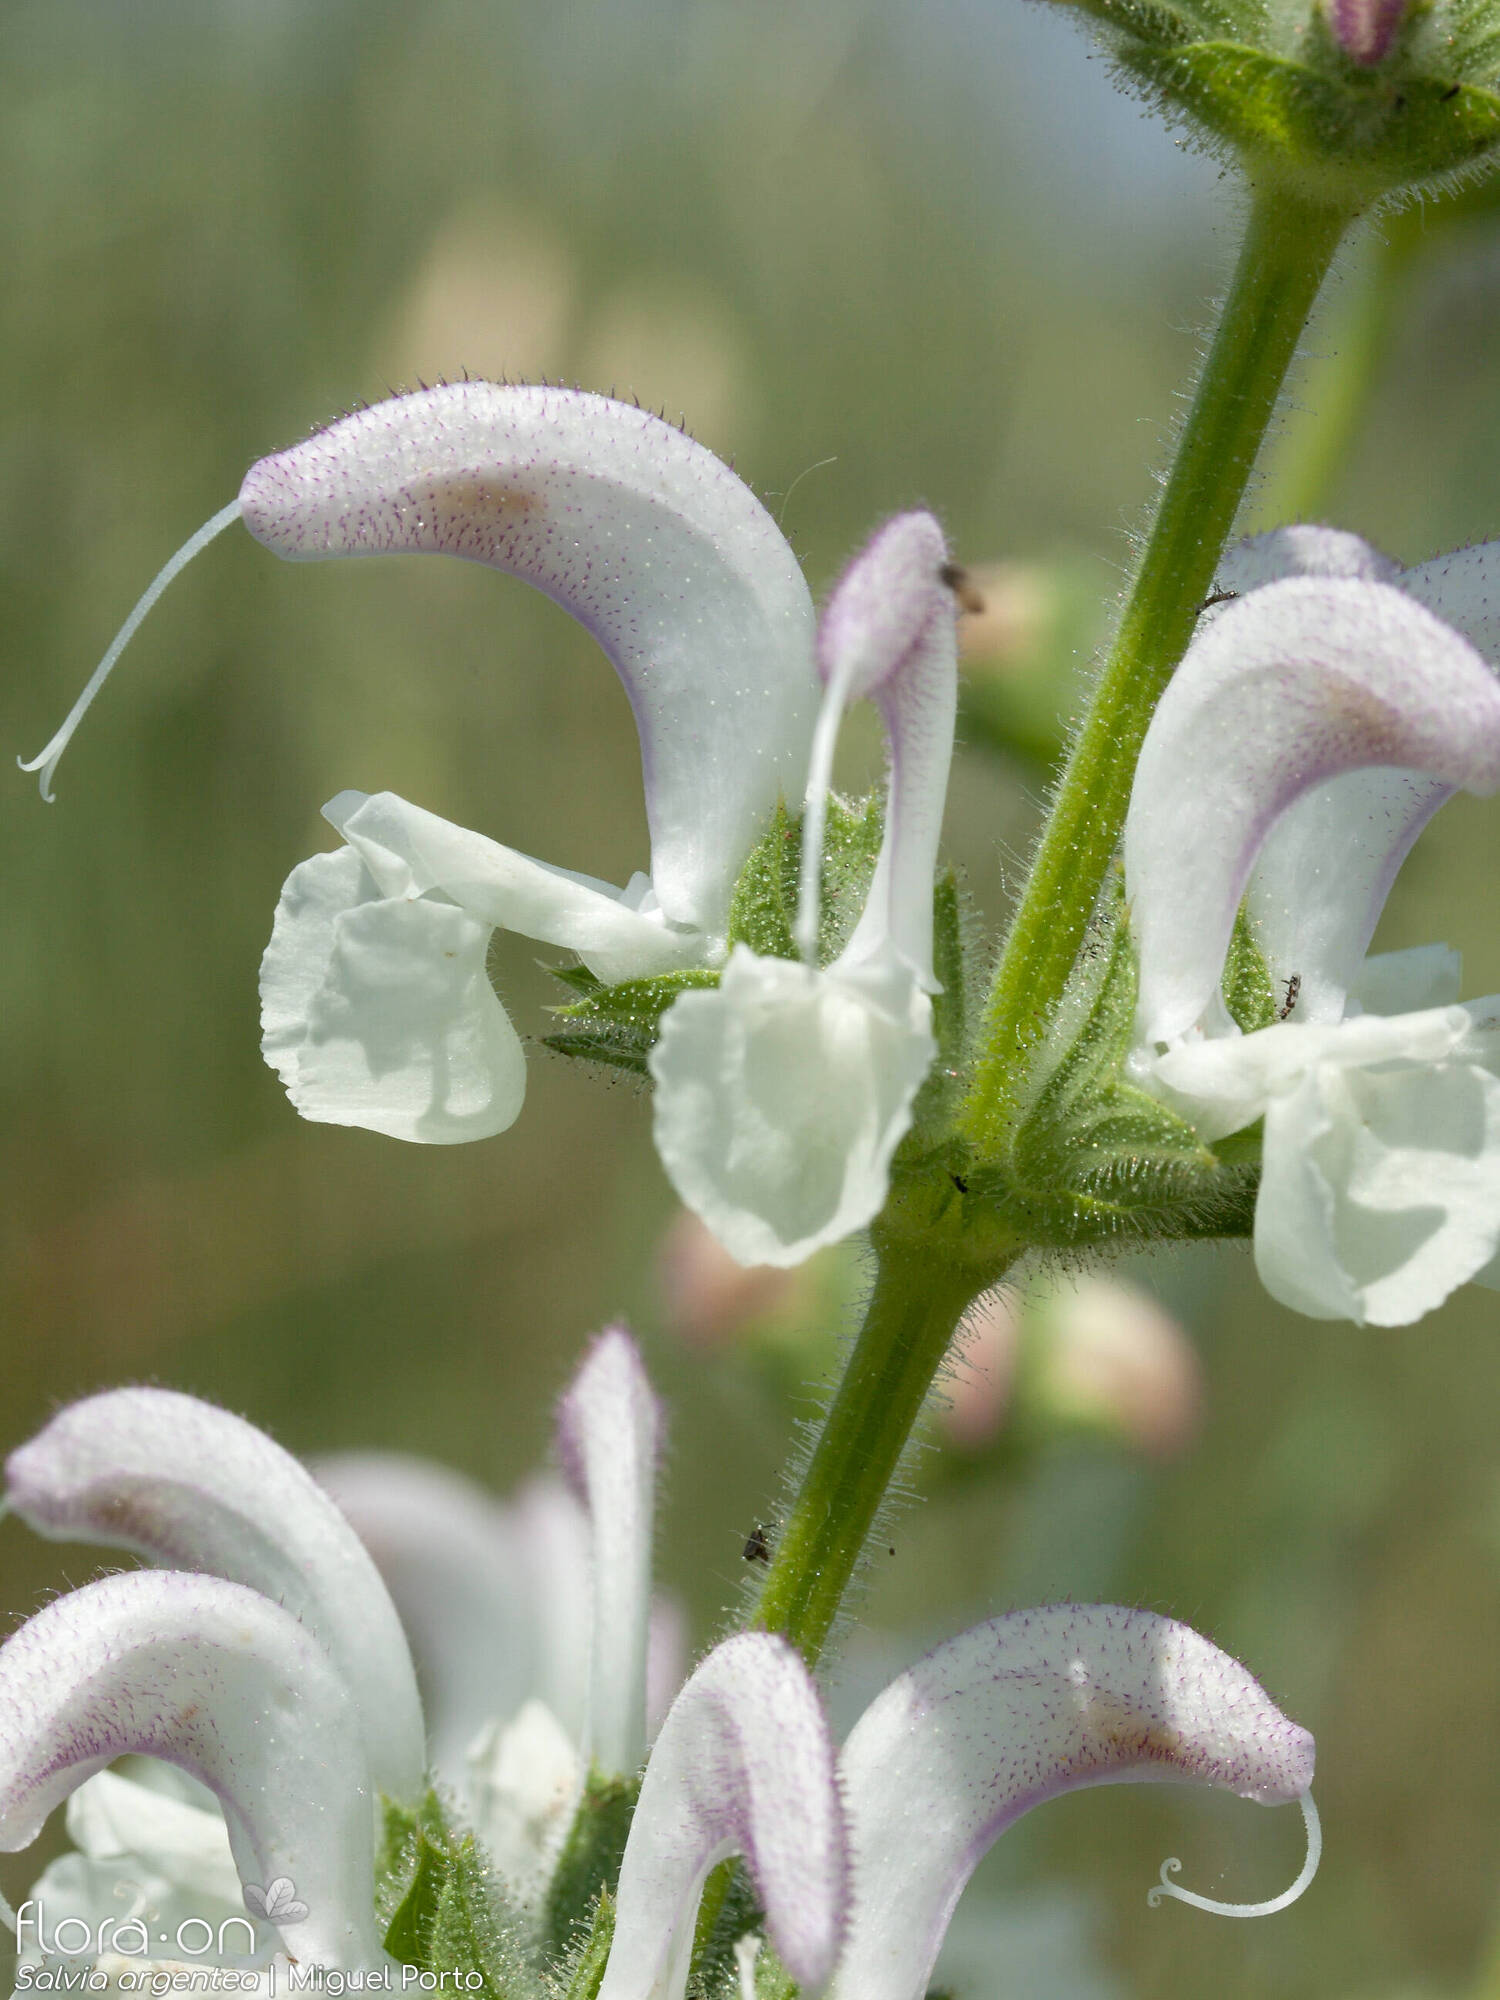 Salvia argentea - Flor (close-up) | Miguel Porto; CC BY-NC 4.0